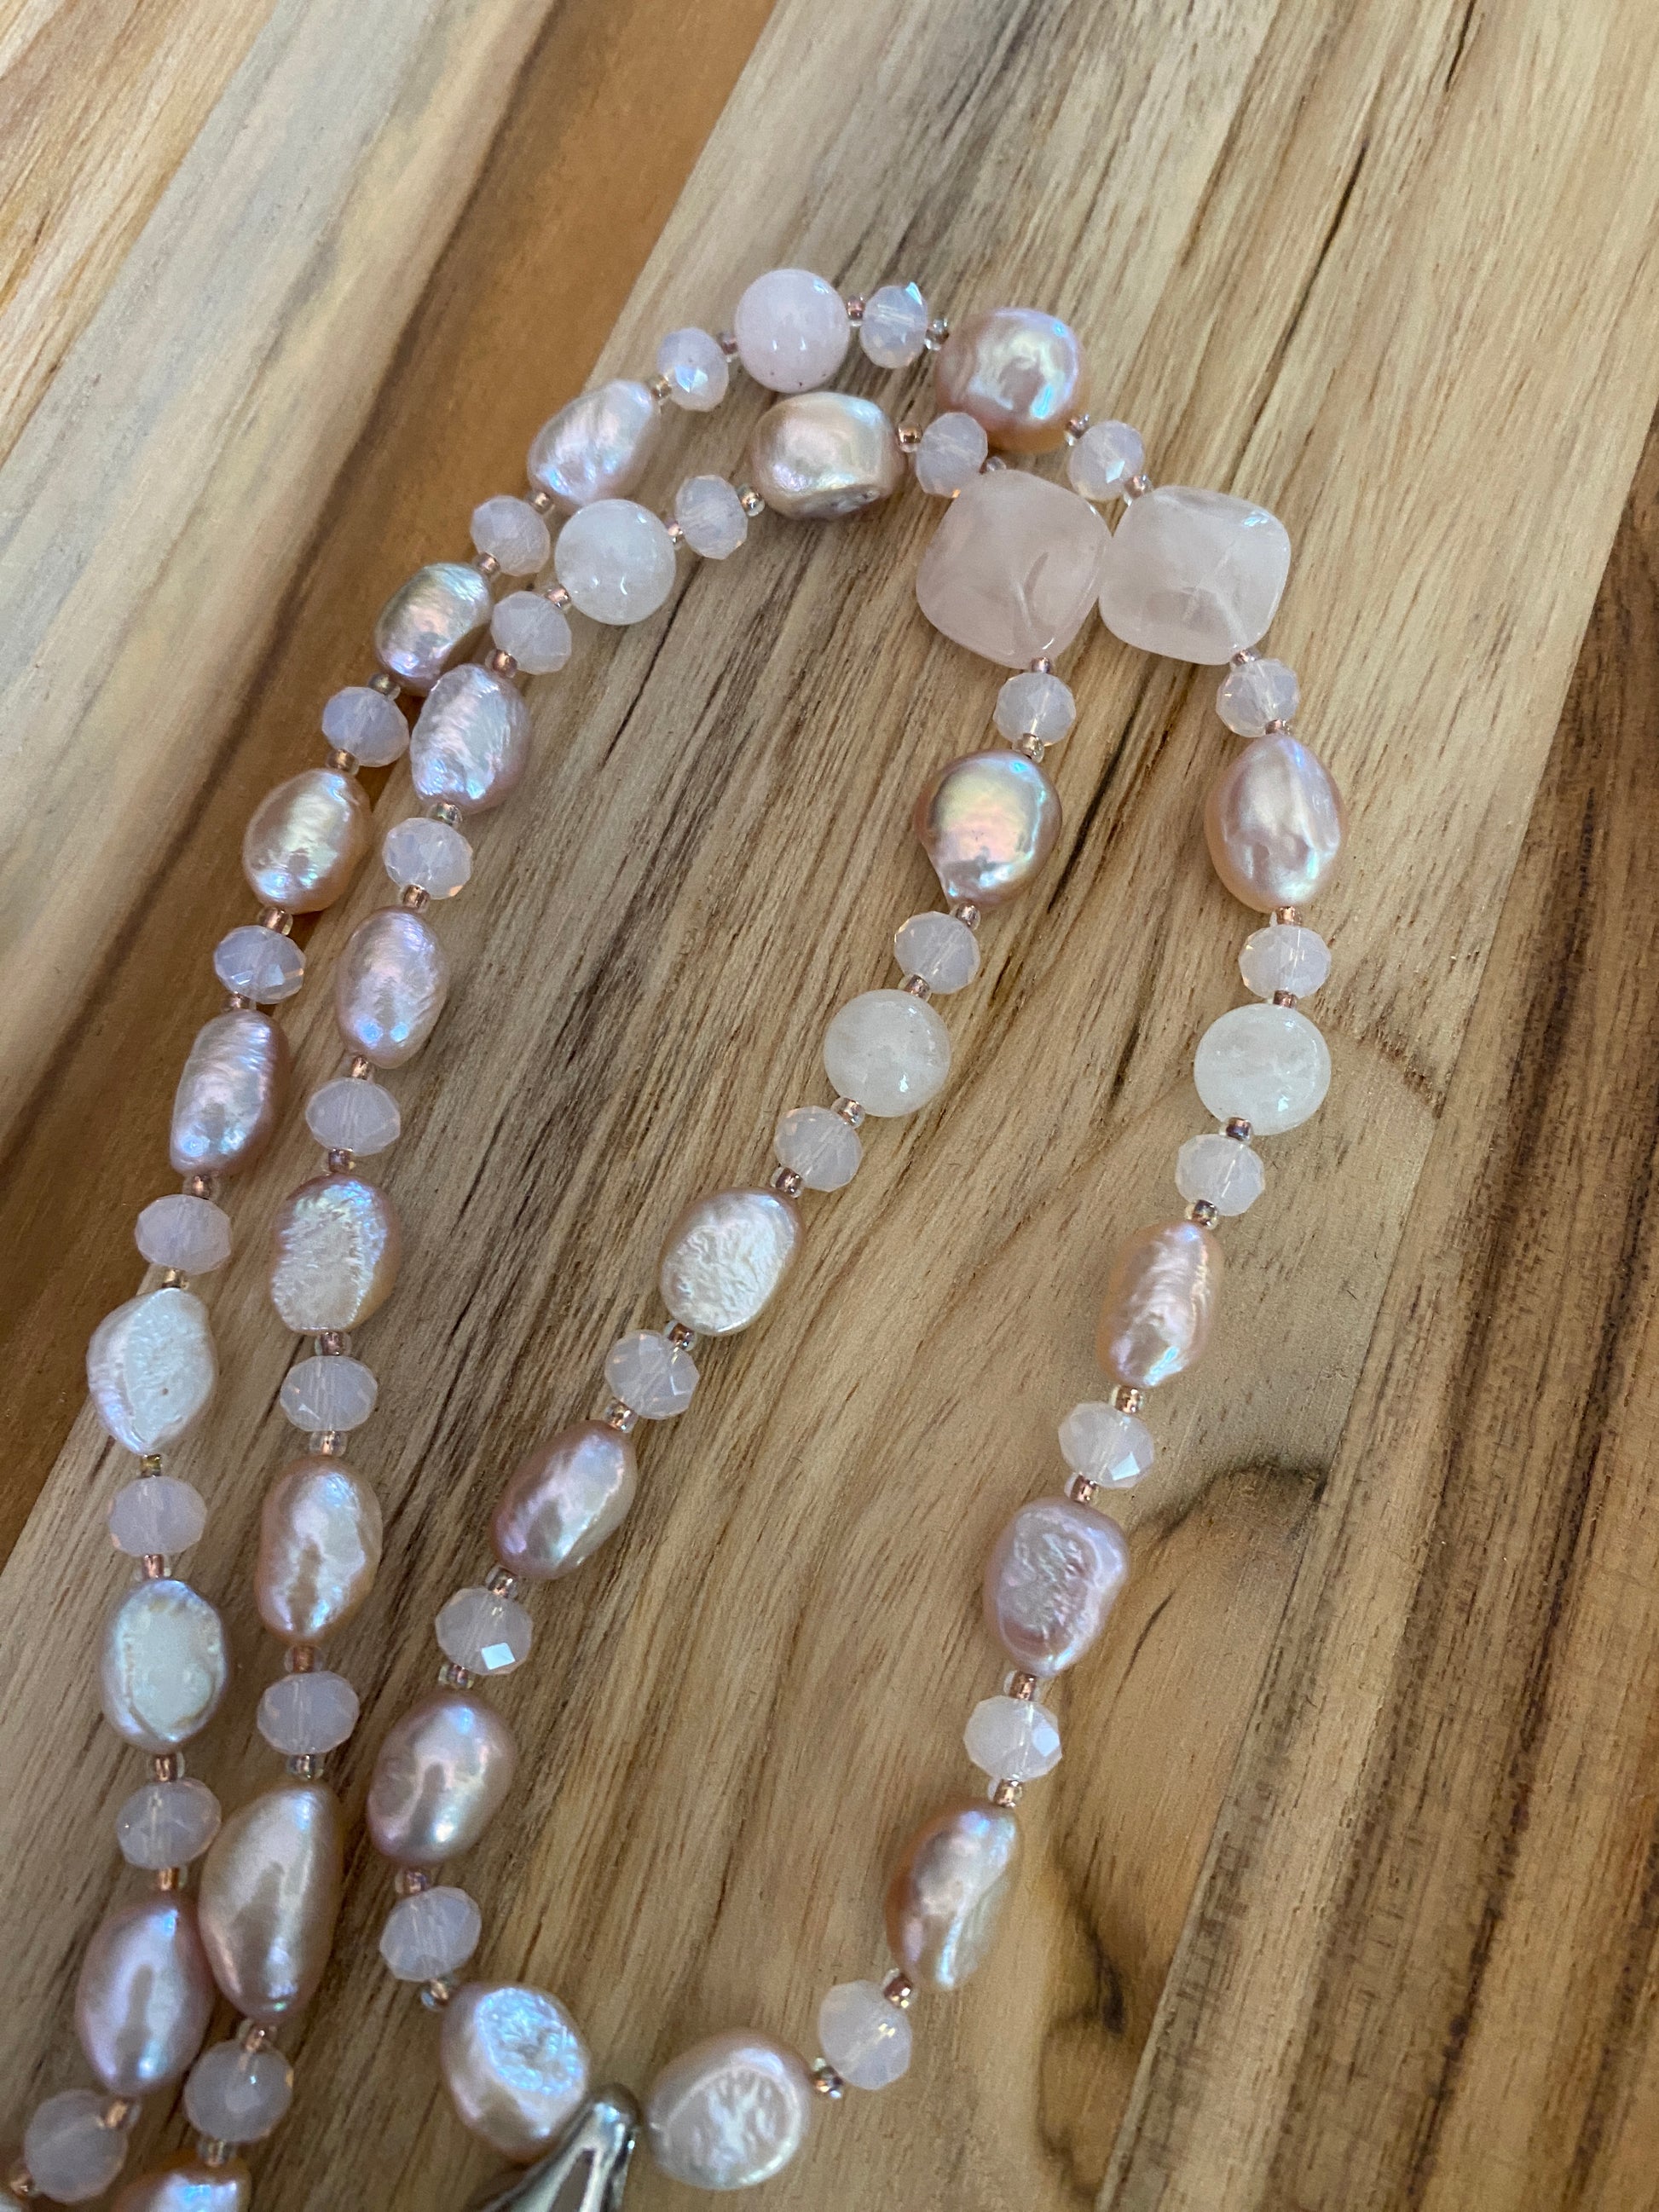 28" Long Rose Quartz Beaded Pendulum Necklace with Pearl & Crystal Beads - My Urban Gems